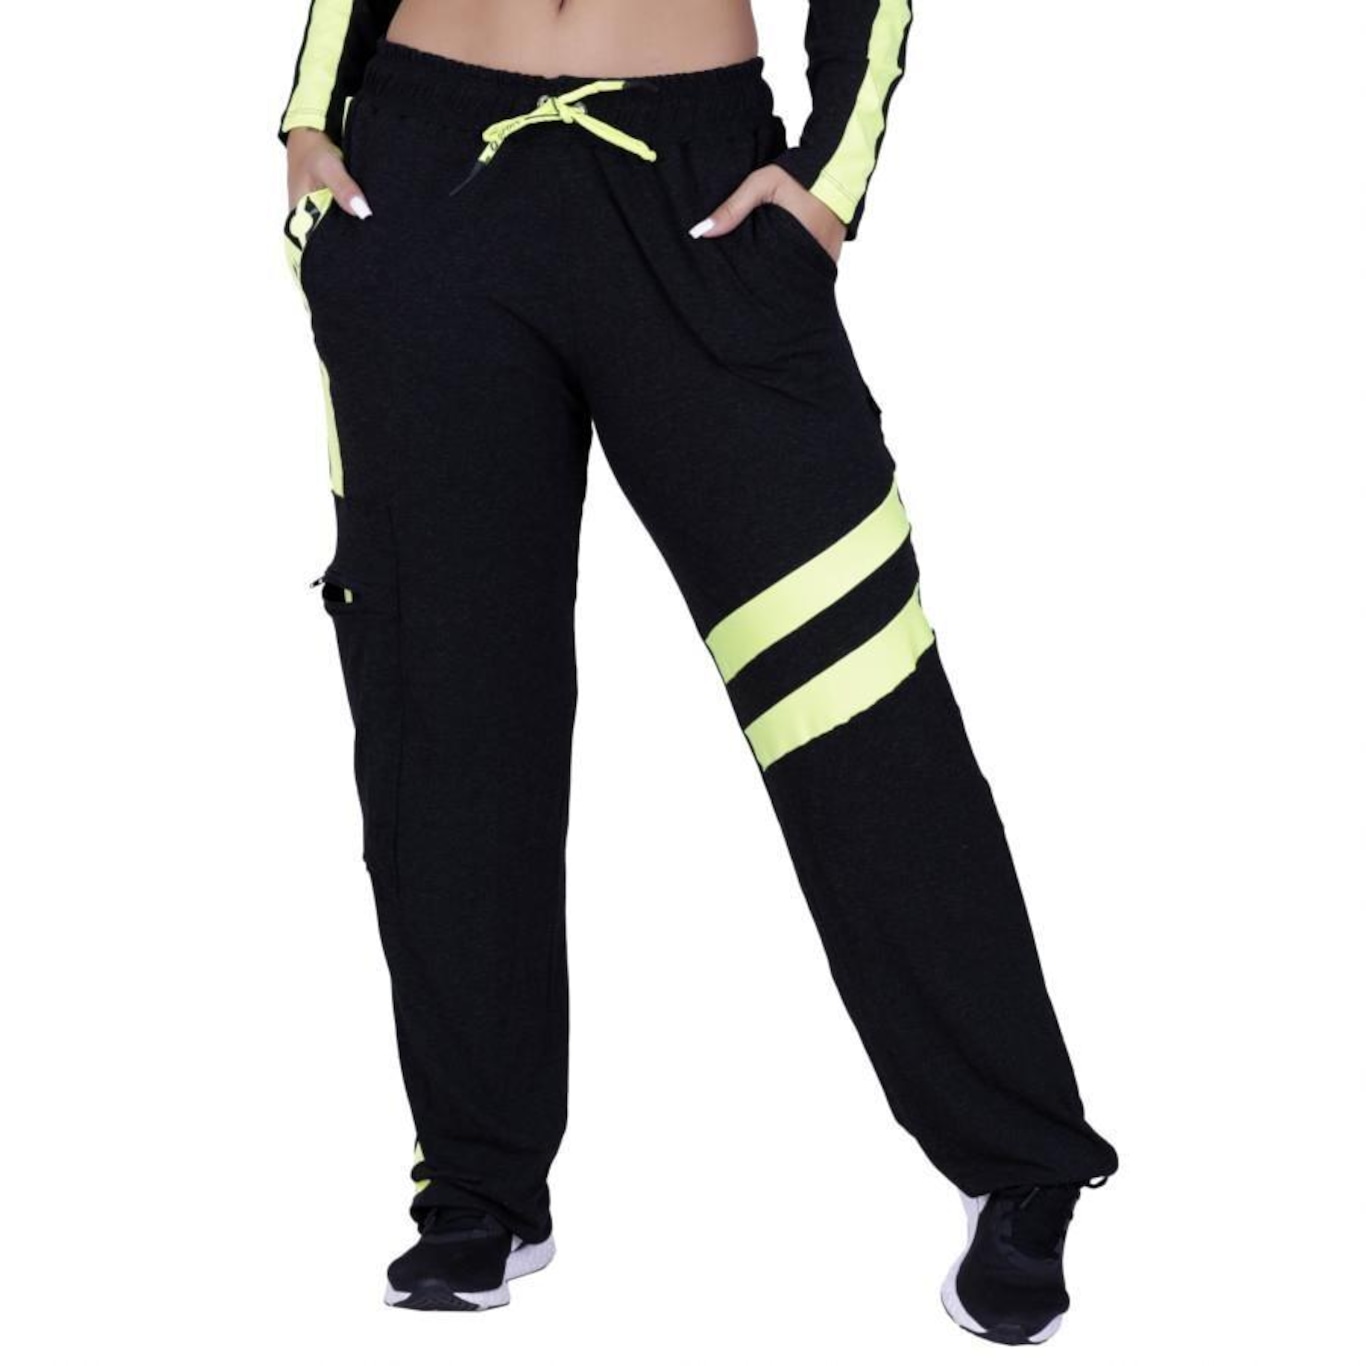 MODA NOVA Juniors' Plus Size Sweatpants Elastic Waist Jogger Pants Gray 4X  